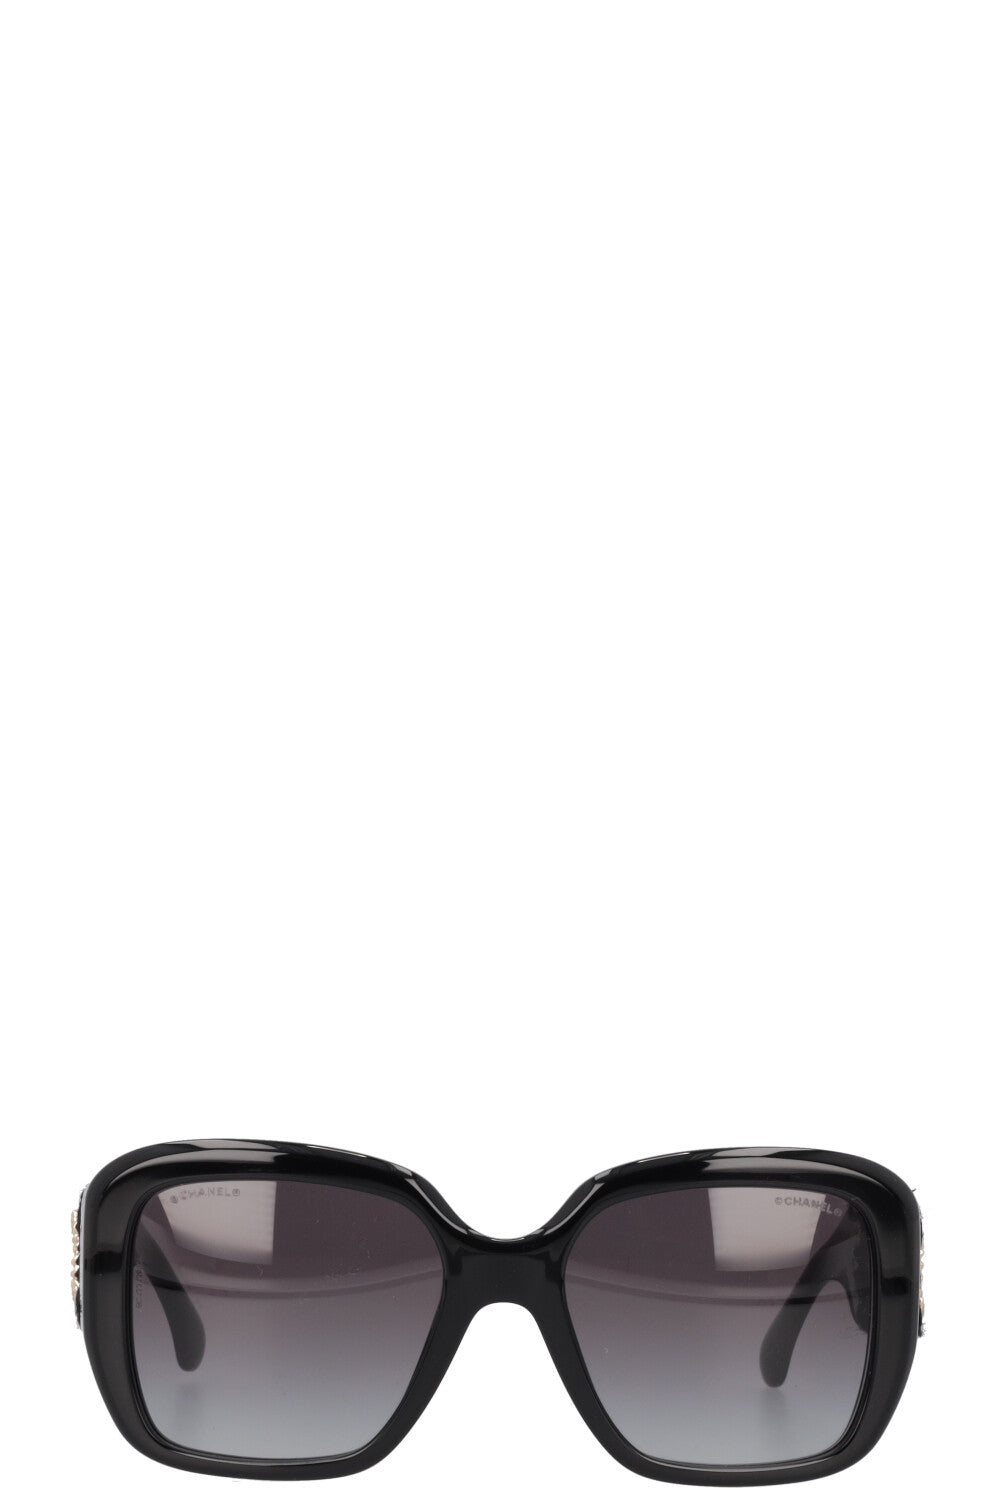 CHANEL Sunglasses 5512 Tweed Black